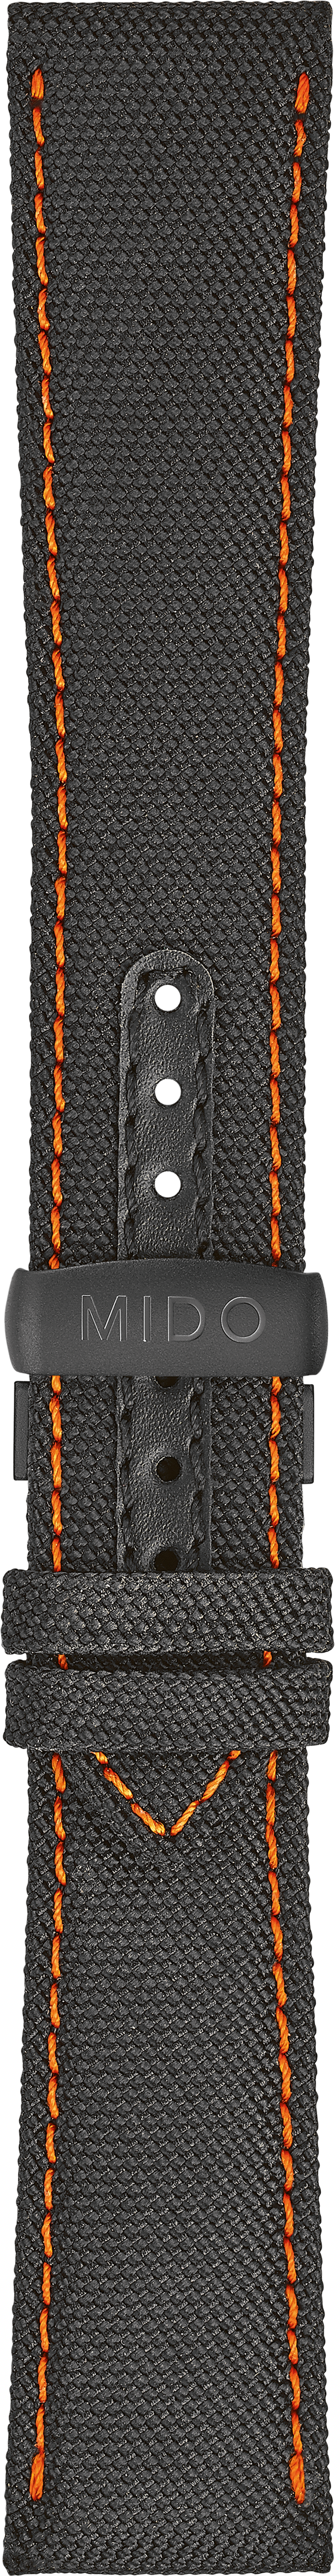 Mido Commander schwarzes Kalbsleder-Armband